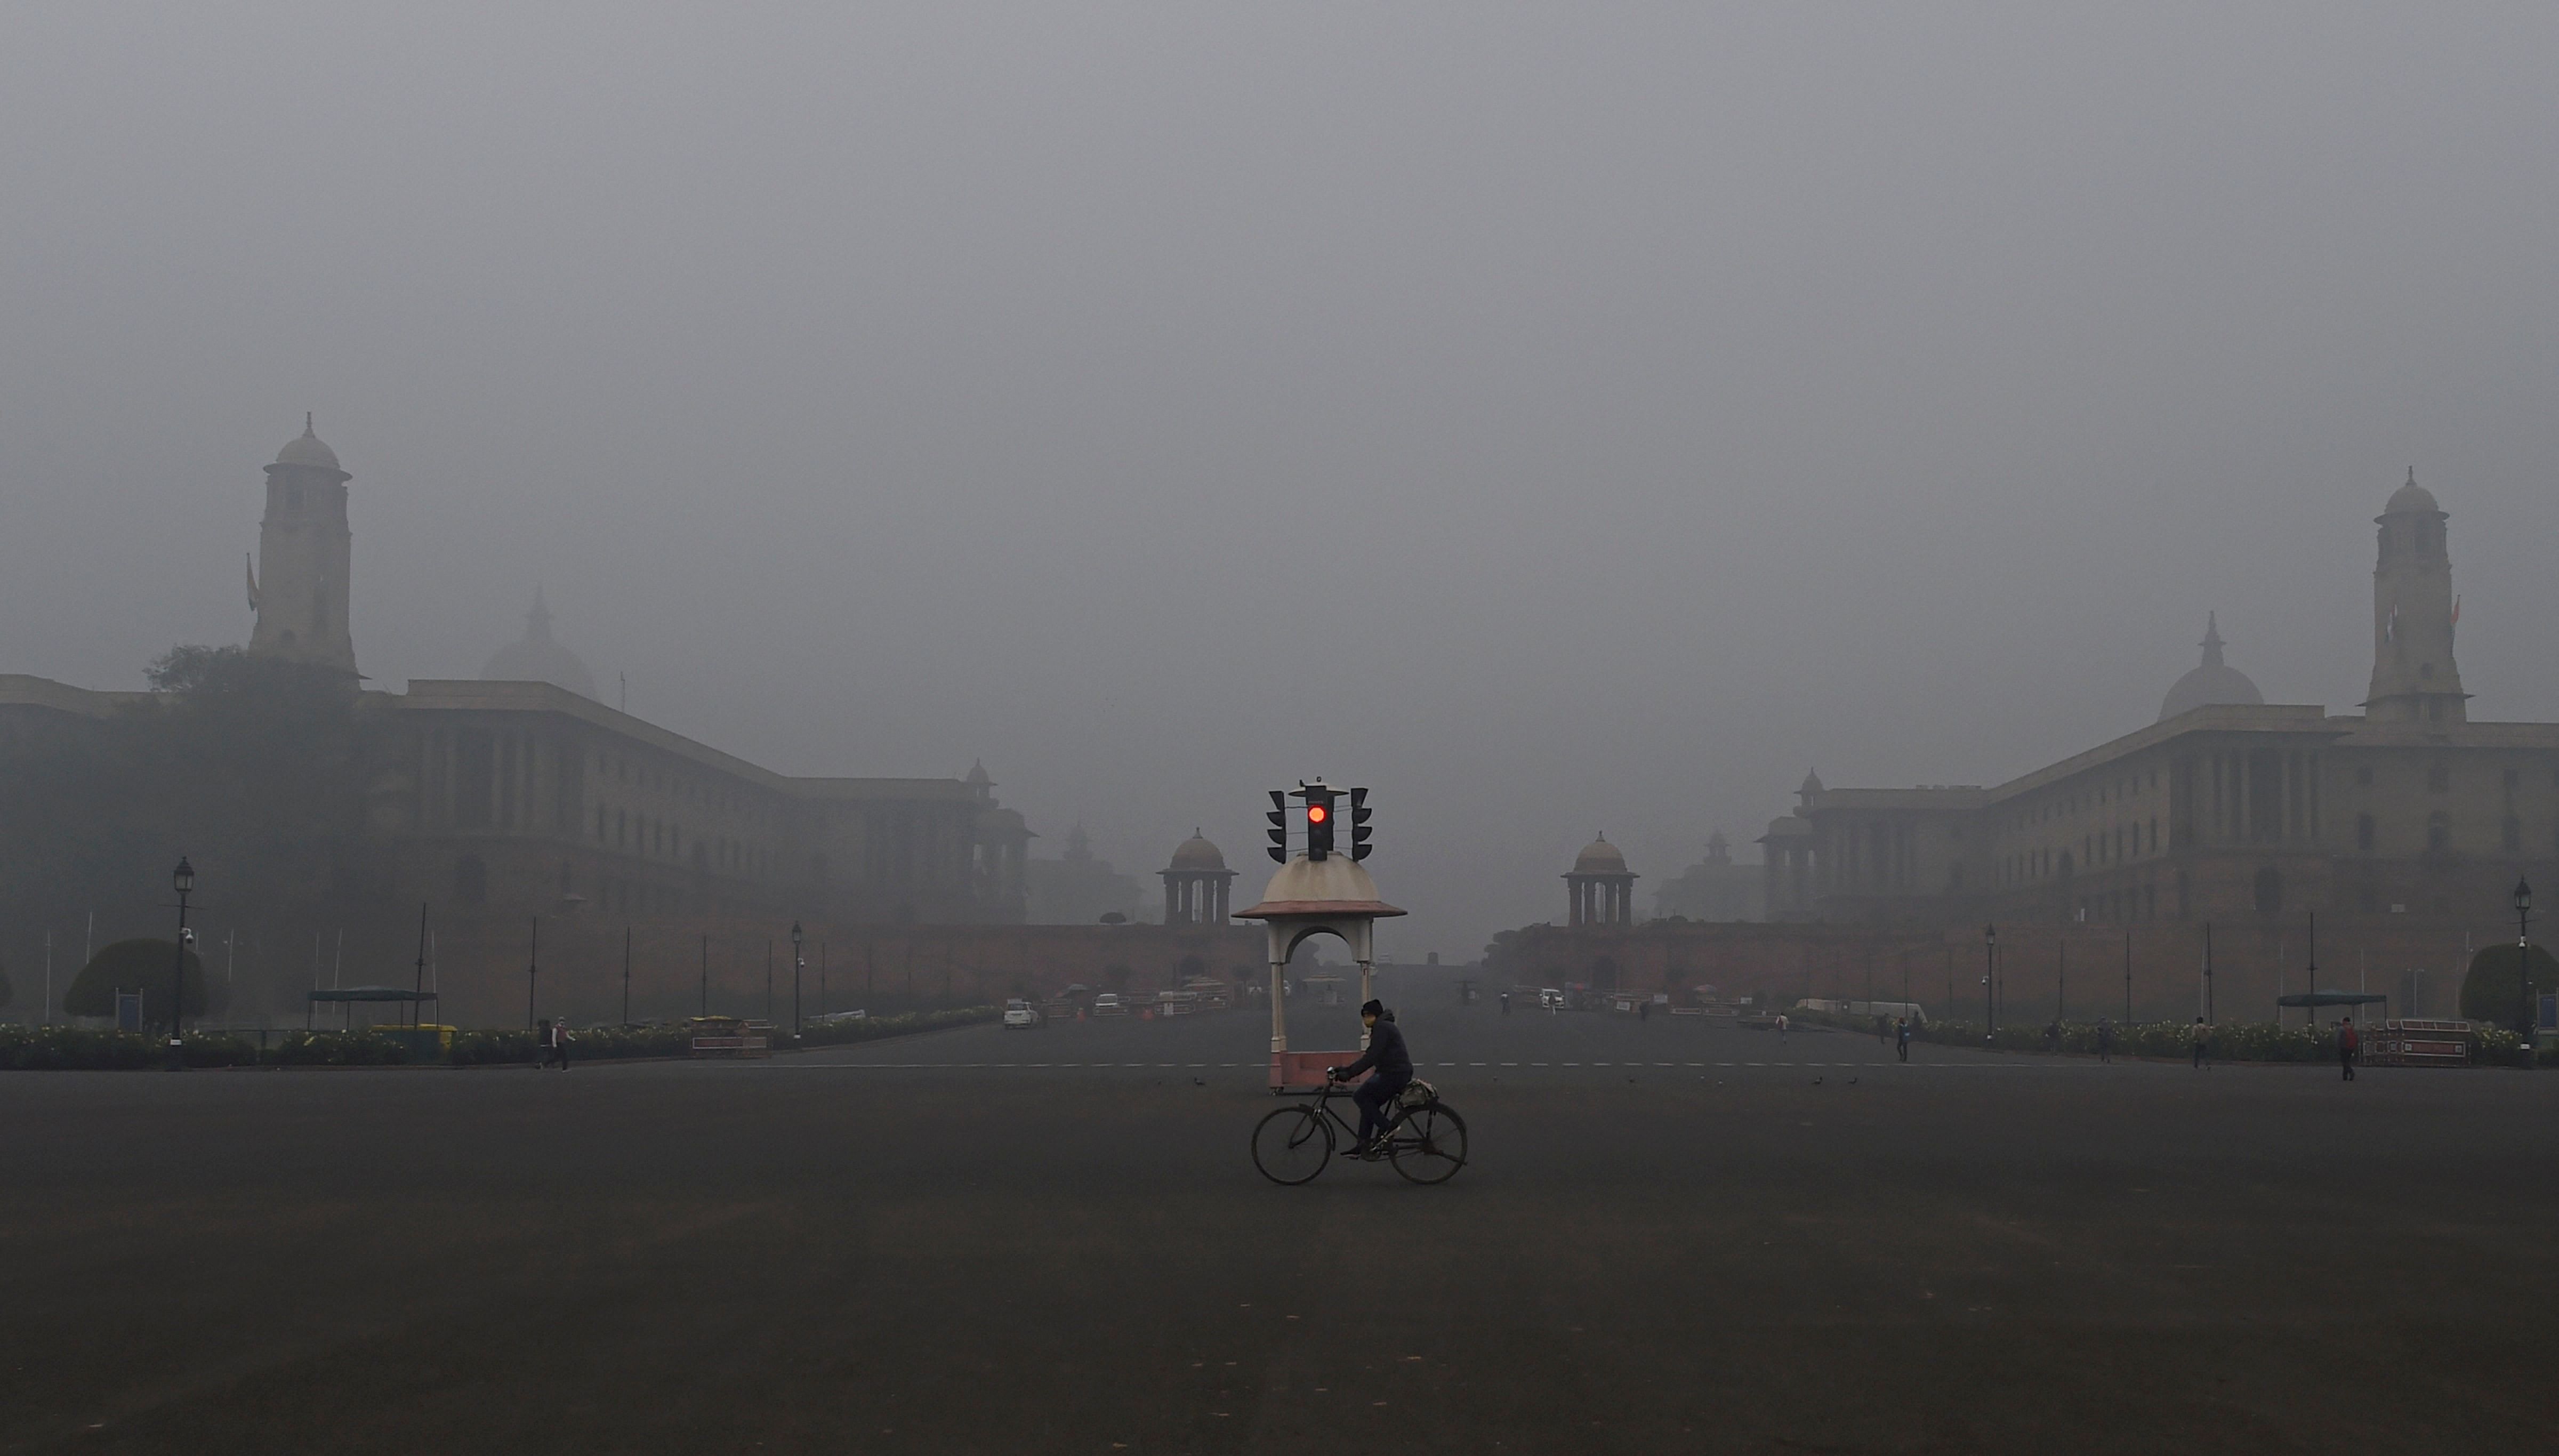 A man rides cycle near the Vijay Chowk, amid a cold and foggy winter morning in New Delhi, Tuesday, Jan. 12, 2021. Credit: PTI Photo